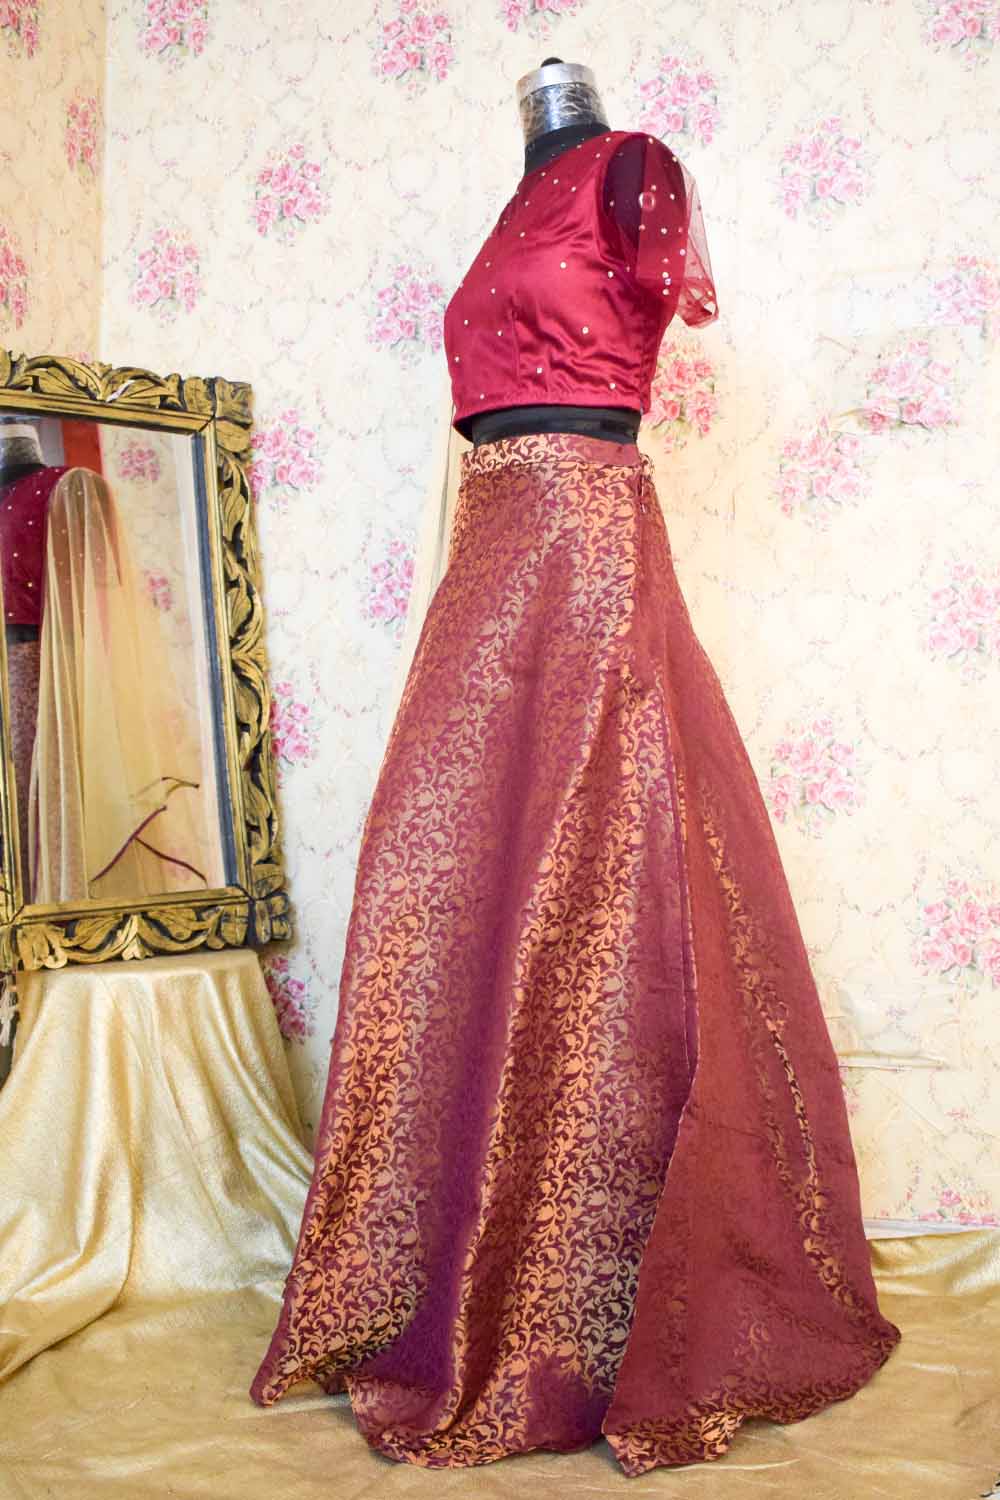 Buy PARANGAT Women's Chanderi Brocade Silk Skirt (Pink,Free Size) at  Amazon.in